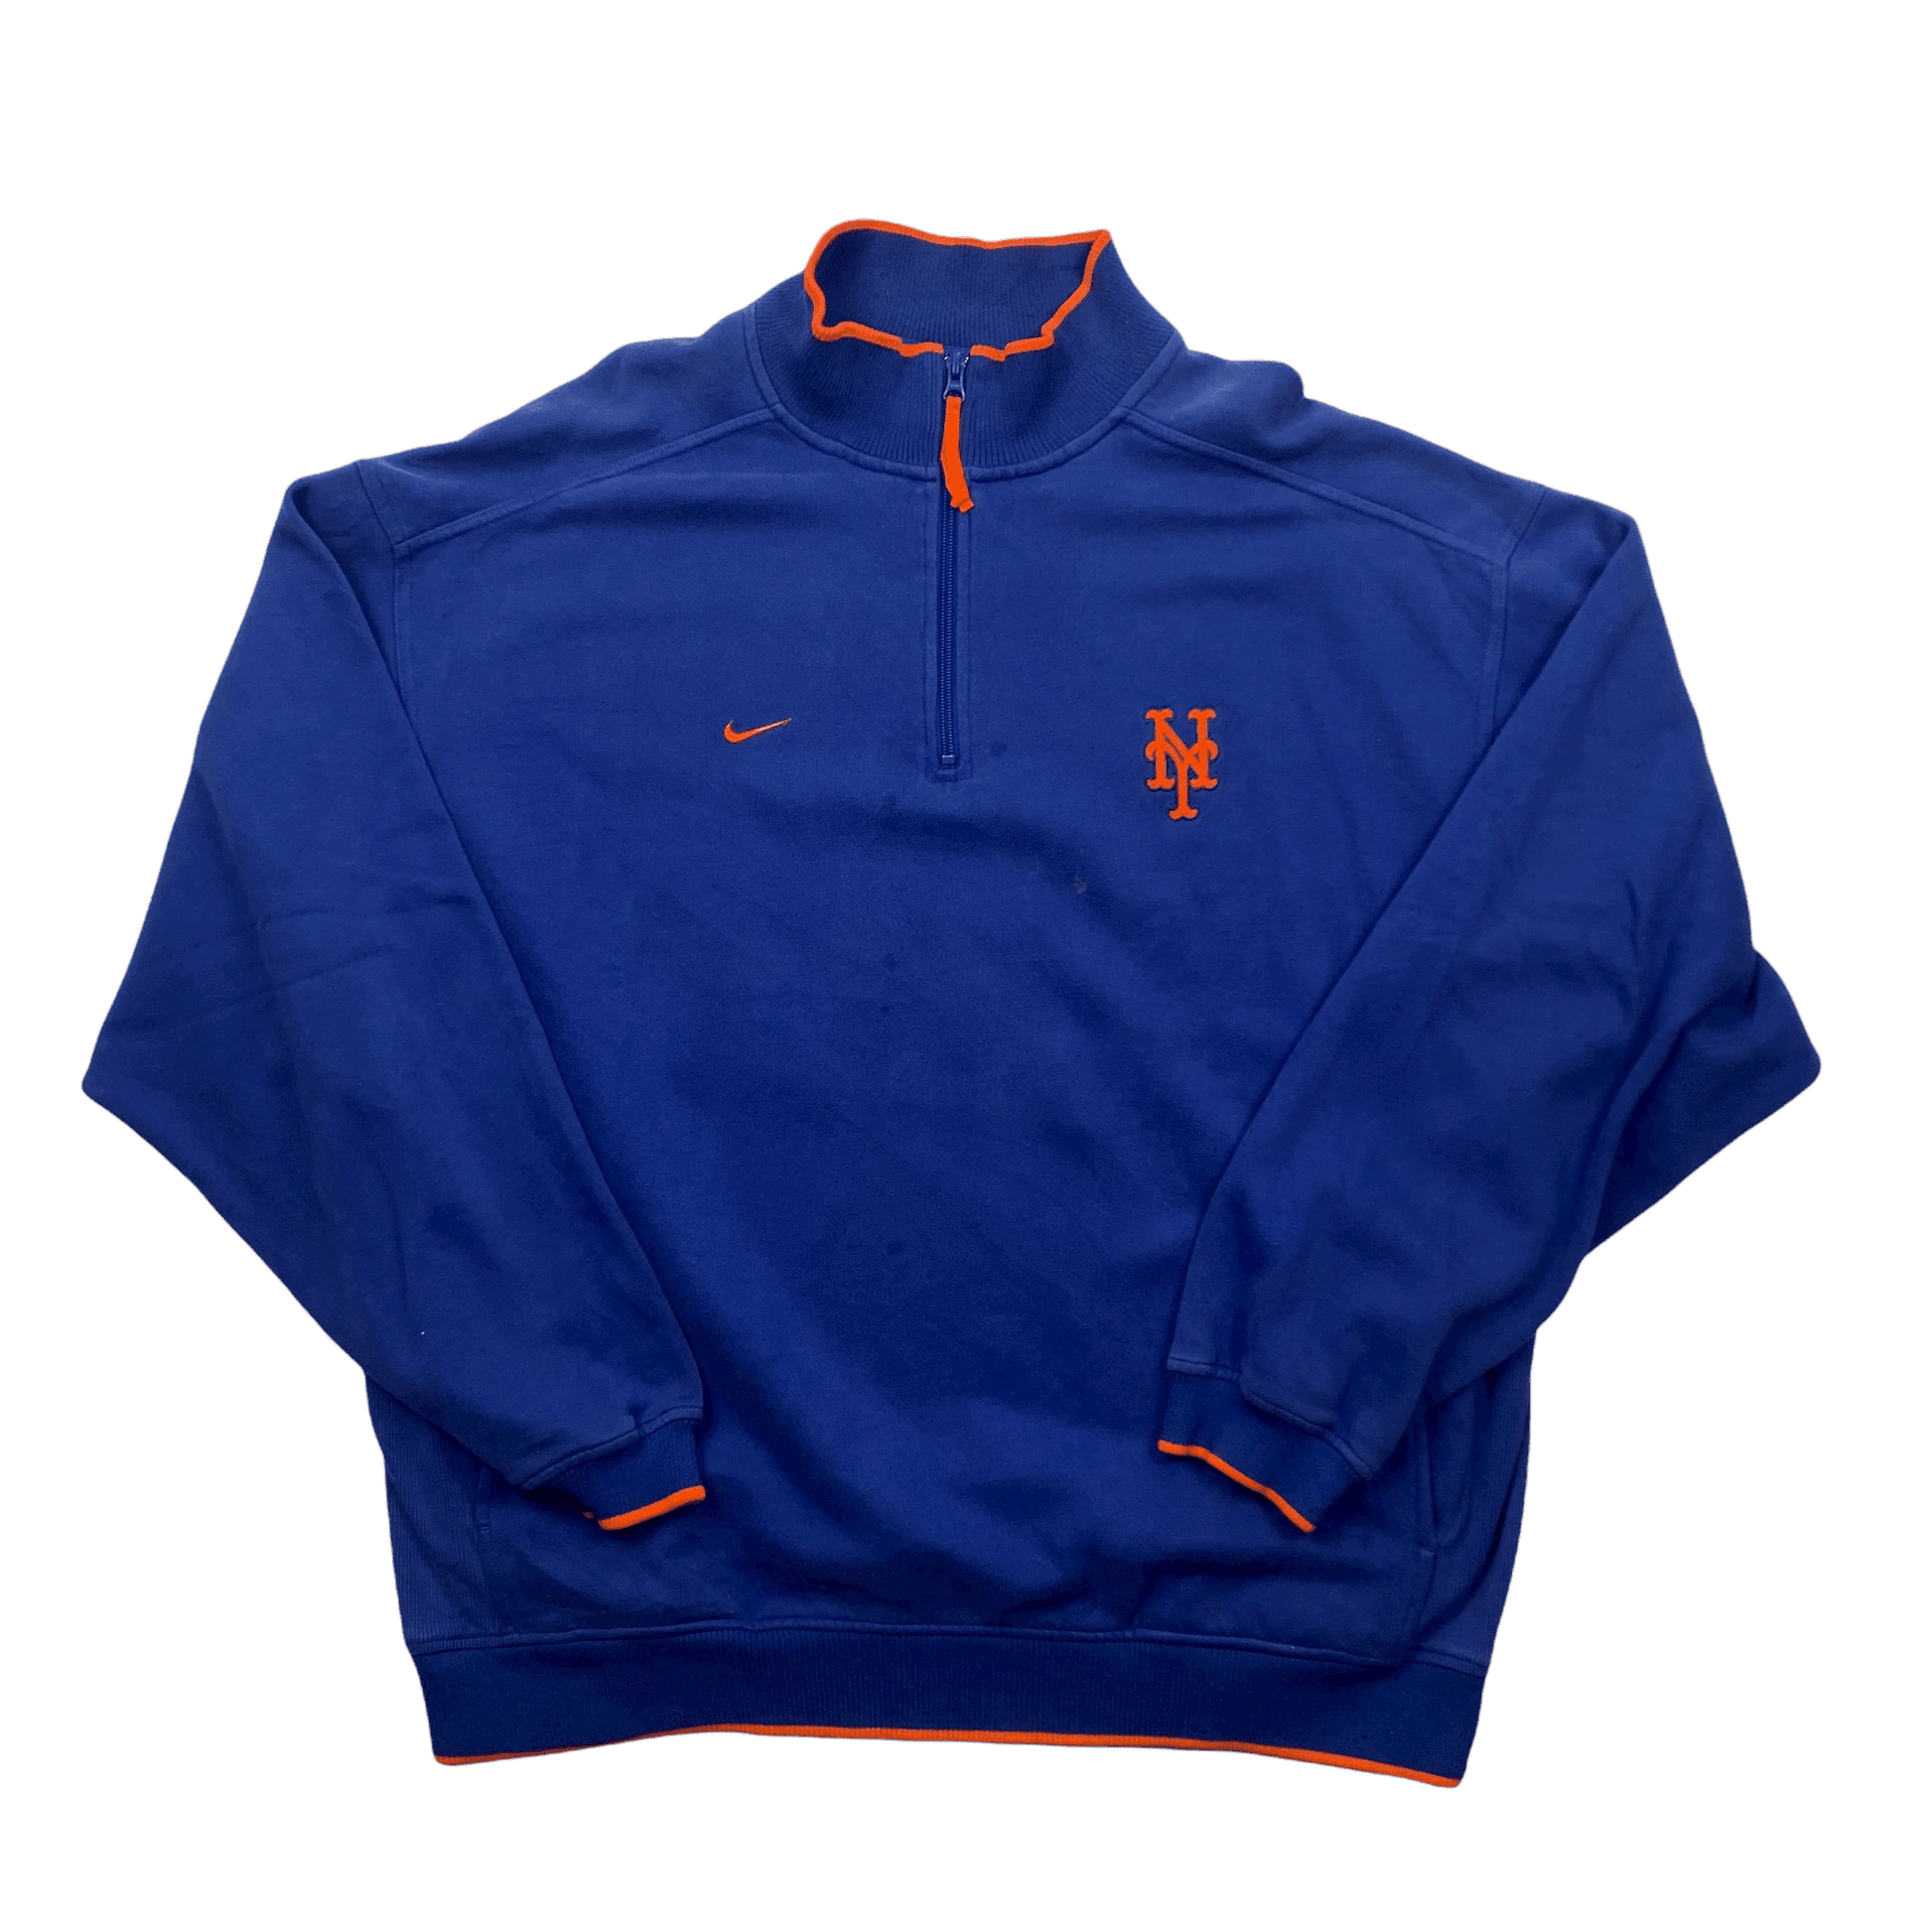 Vintage 90s Navy Blue + Orange Nike New York Giants NFL Quarter Zip Sweatshirt - Extra Large - The Streetwear Studio